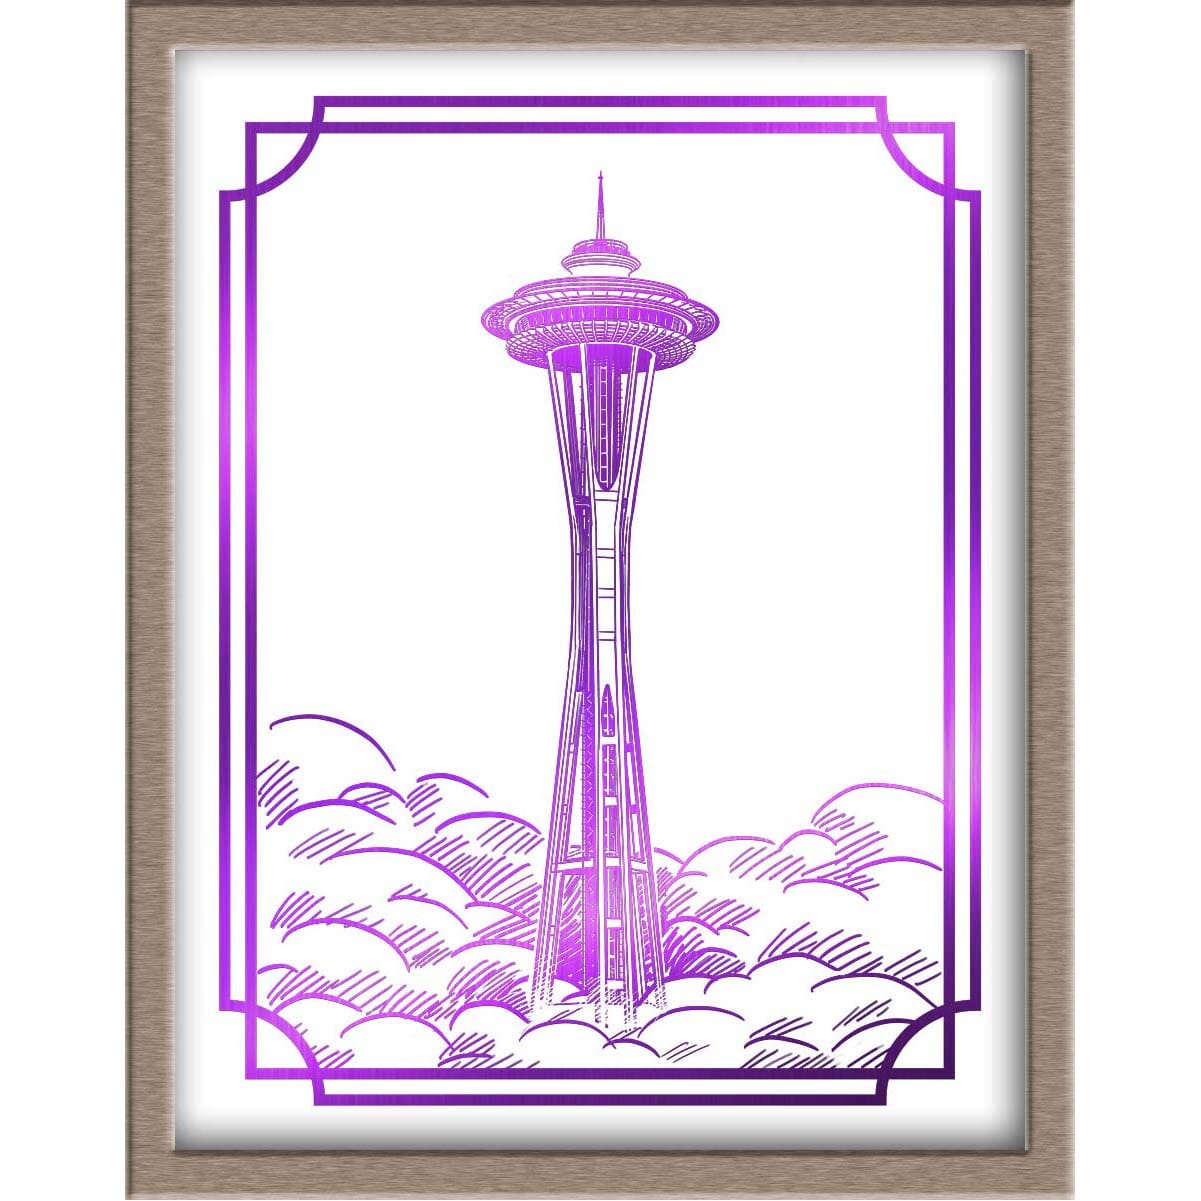 Seattle's Space Needle Landmark Foiled Print Posters, Prints, & Visual Artwork JoyousJoyfulJoyness 